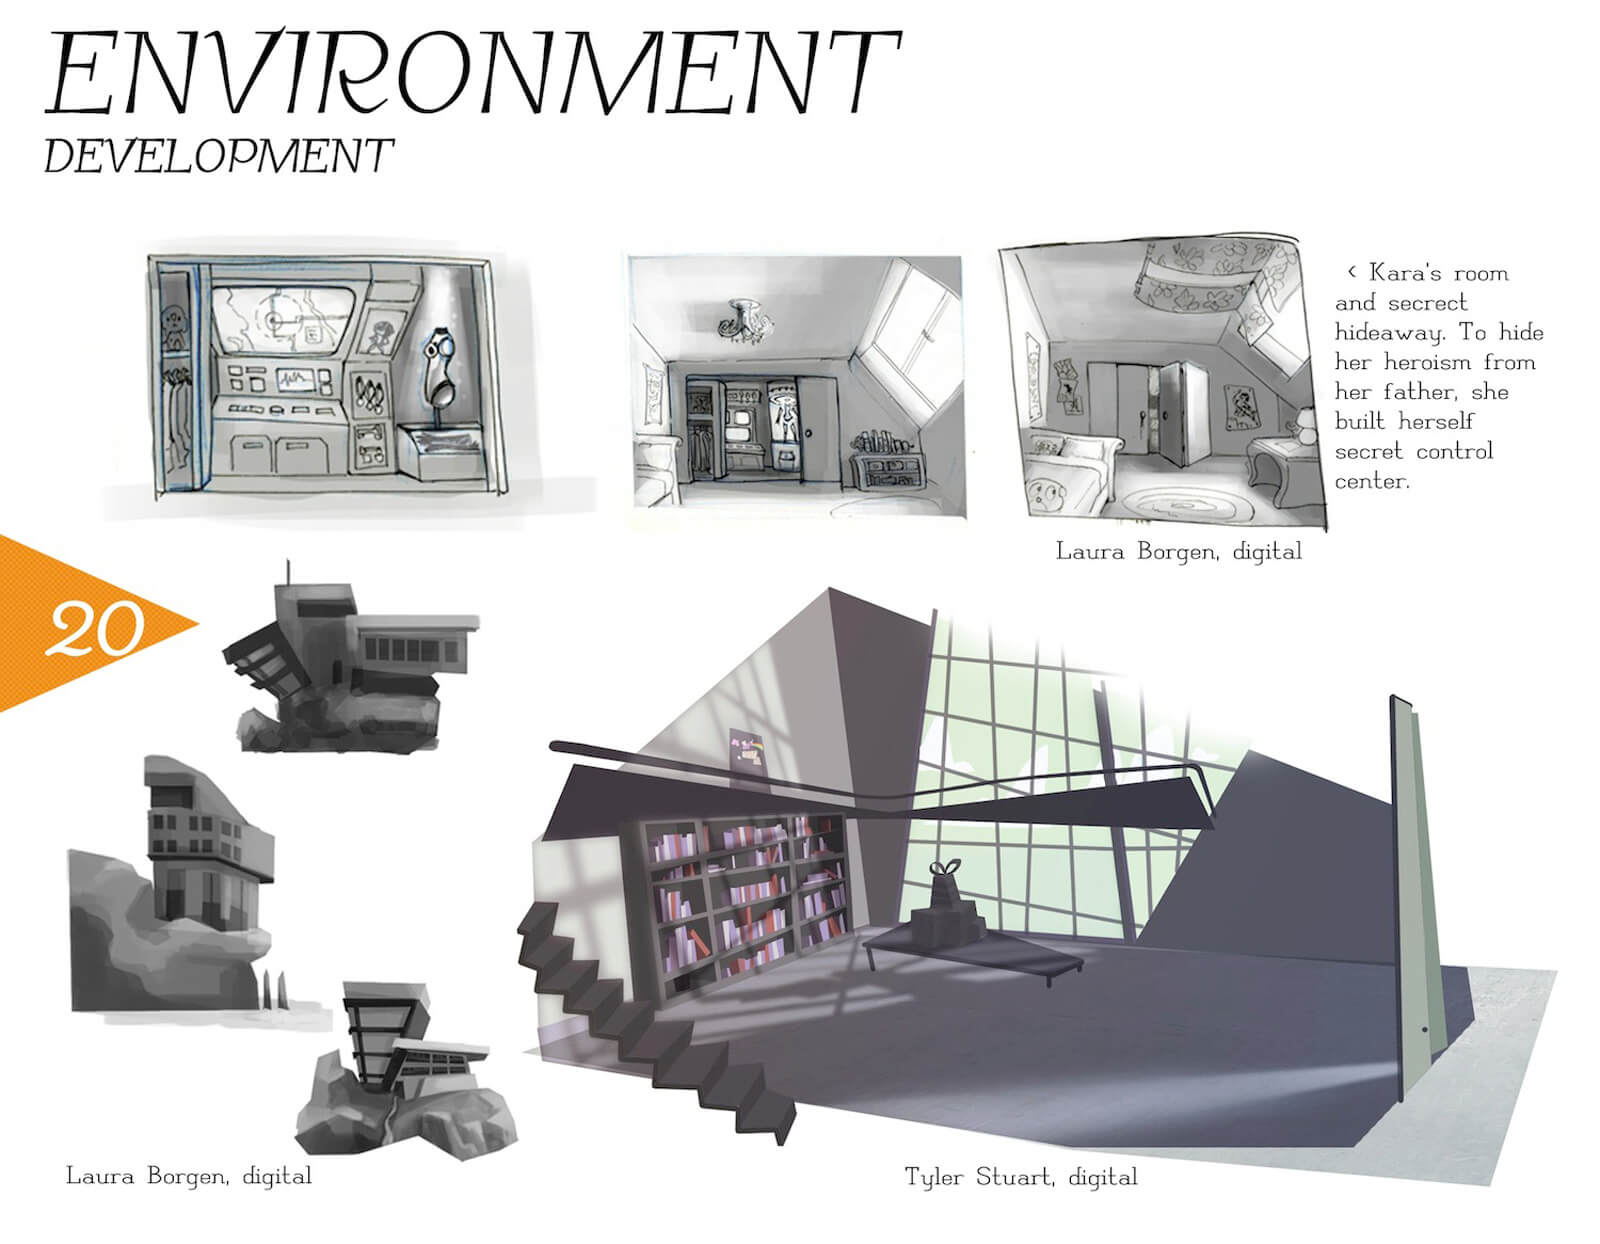 Development slide showing the progression of the loft apartment setting depicted in the film Super Secret